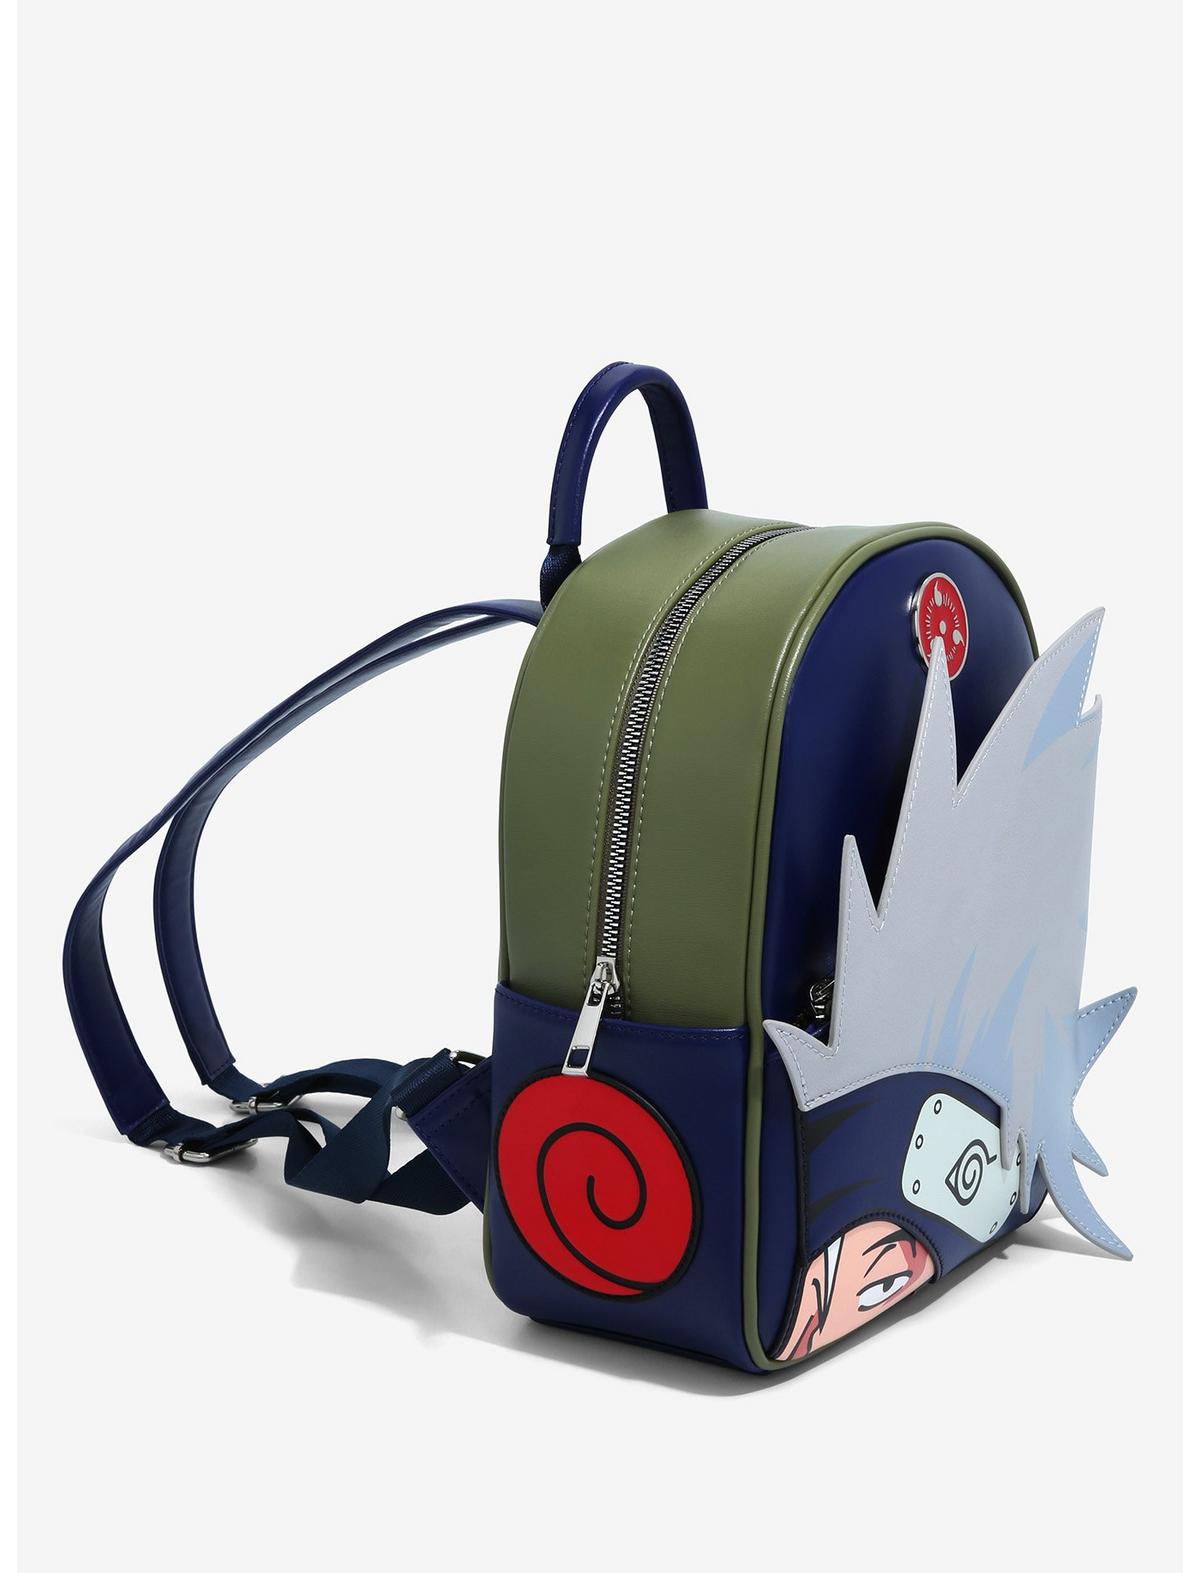 Bioworld The Naruto Ramen Mini Backpack